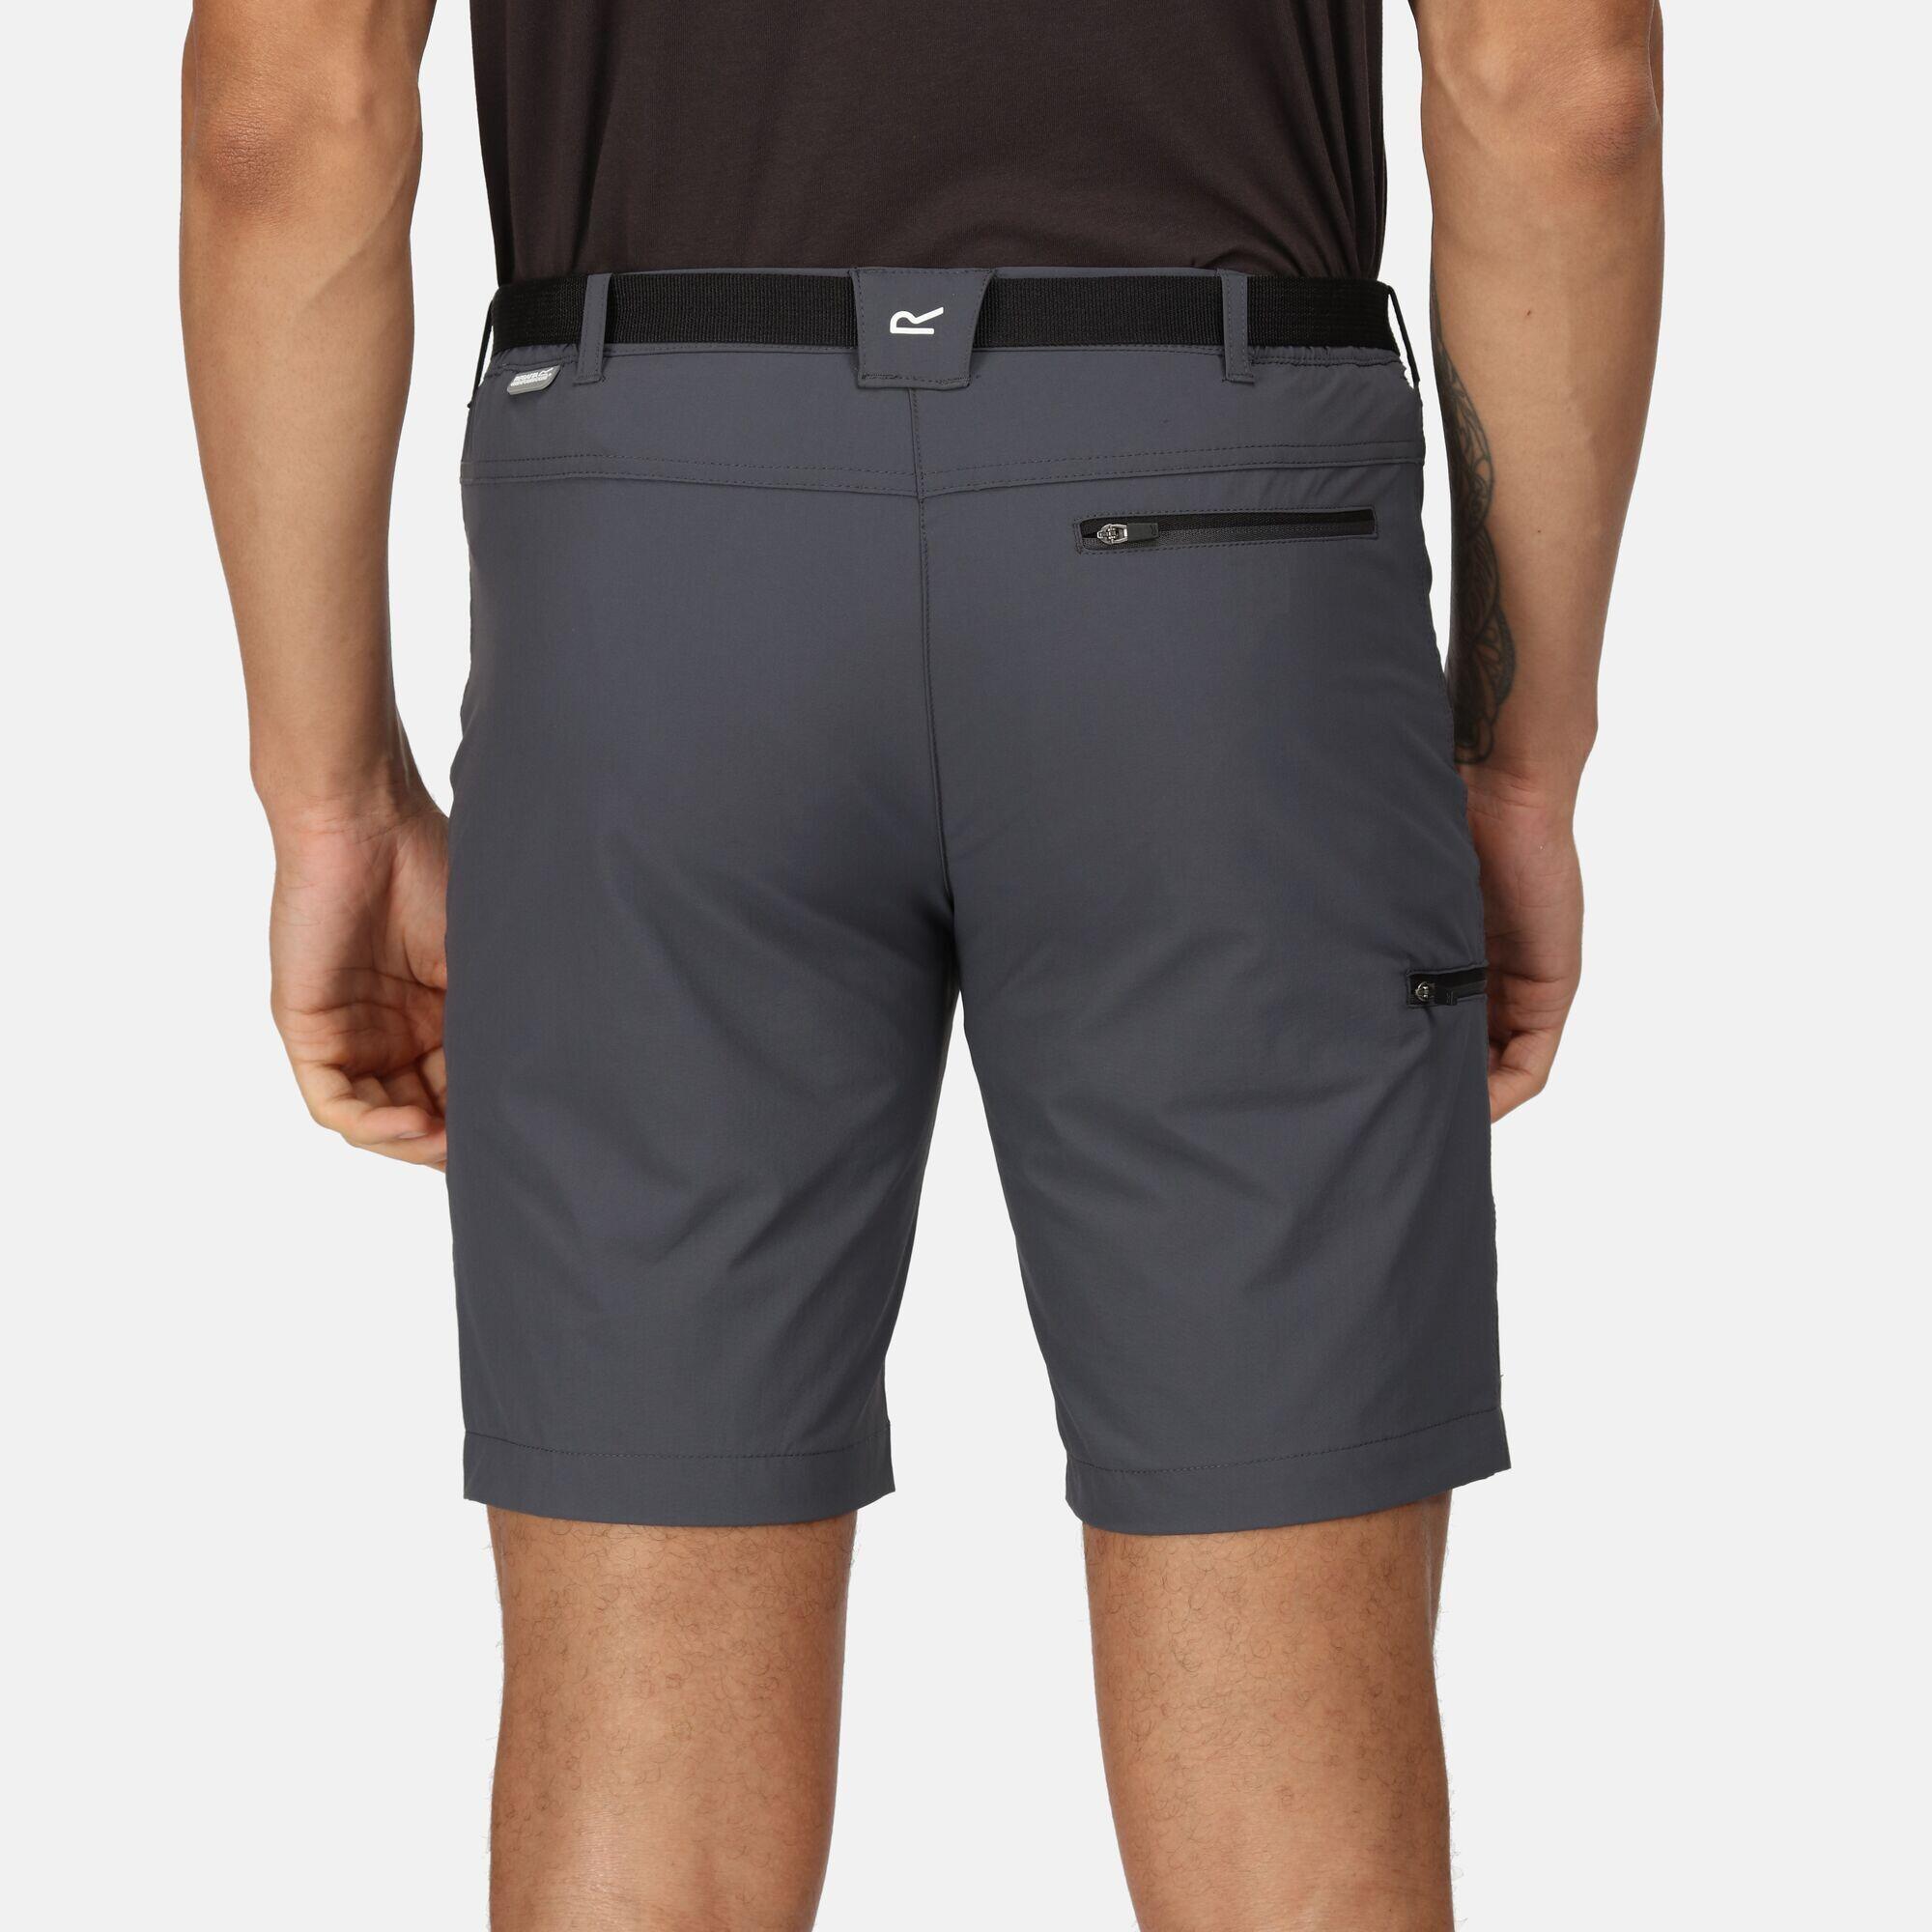 Xert III Men's Hiking Shorts - Mid Grey 6/7